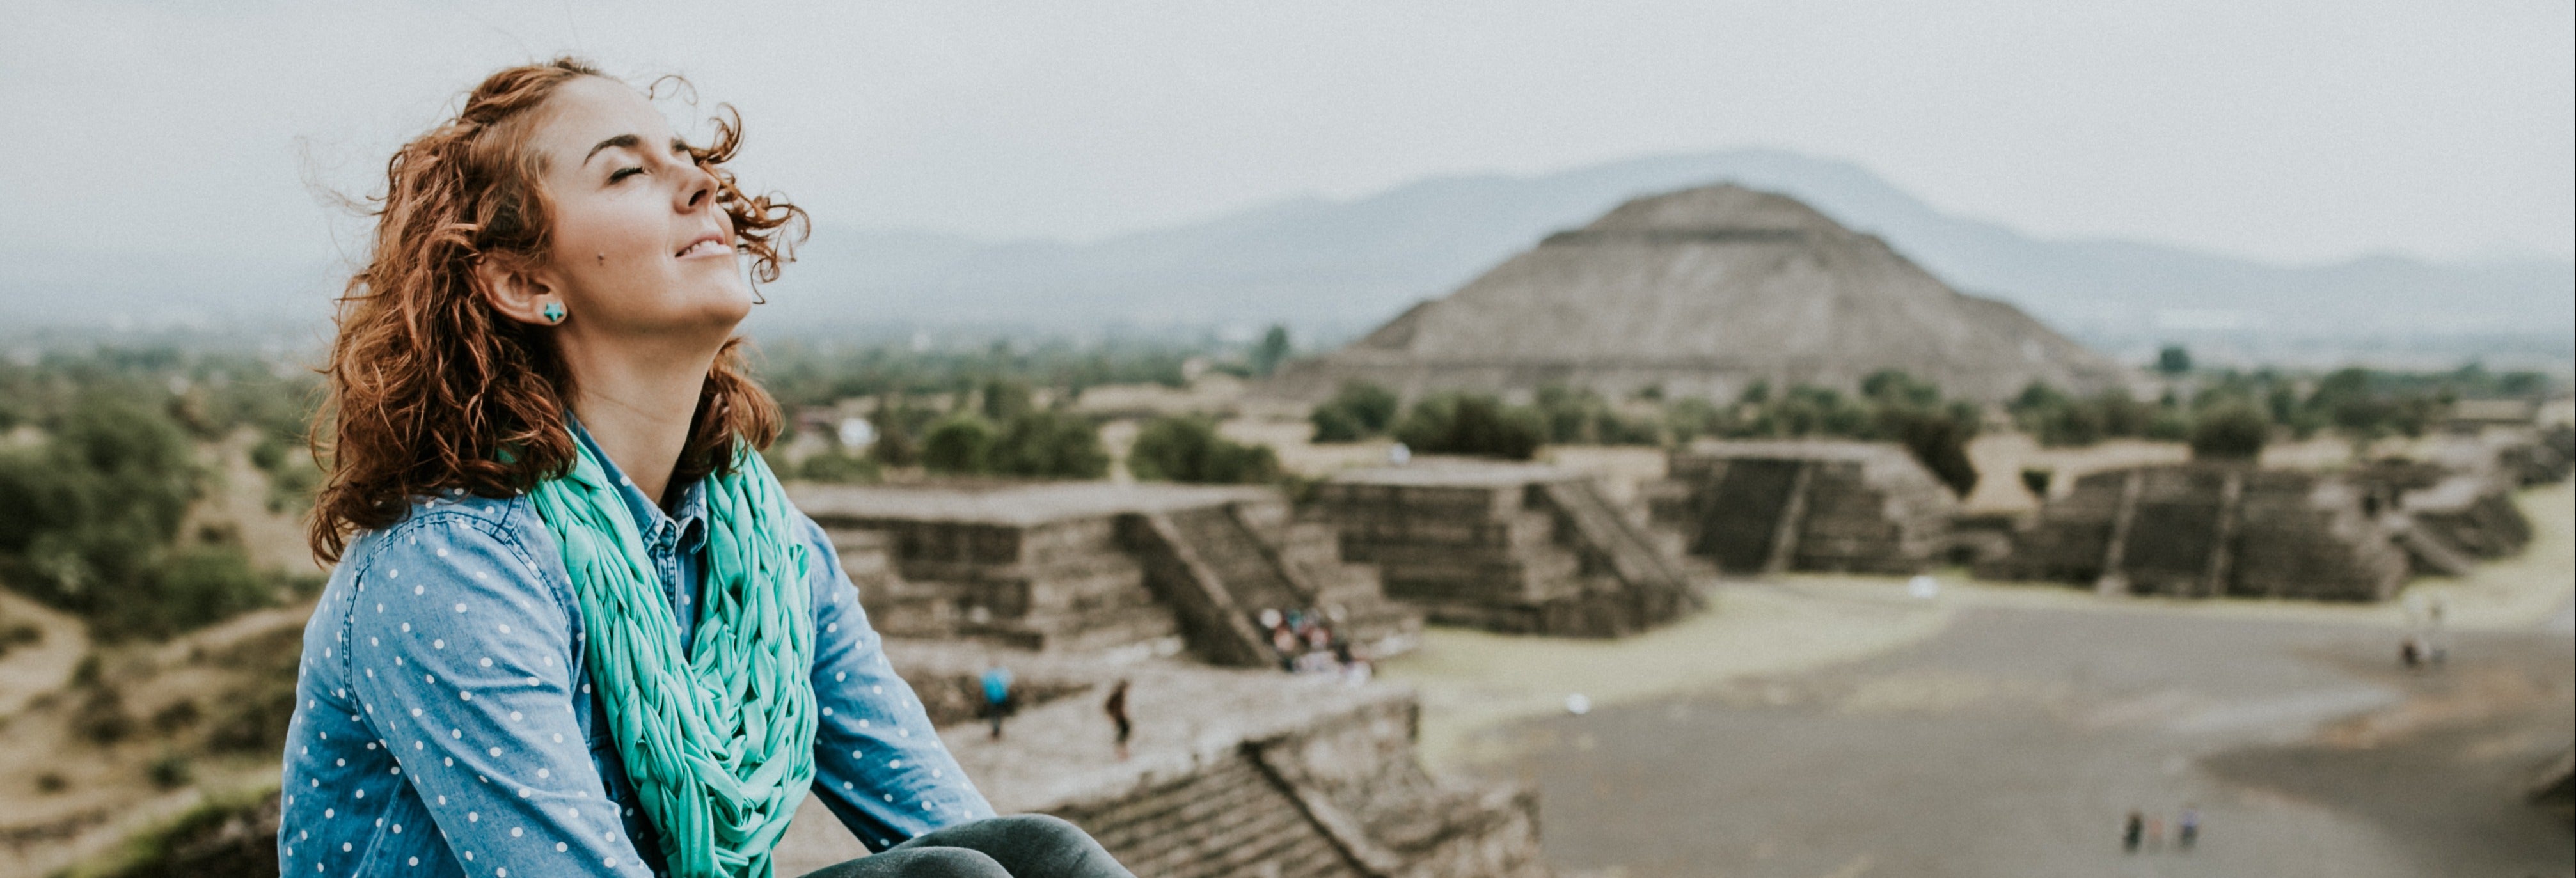 Excursão a Teotihuacán